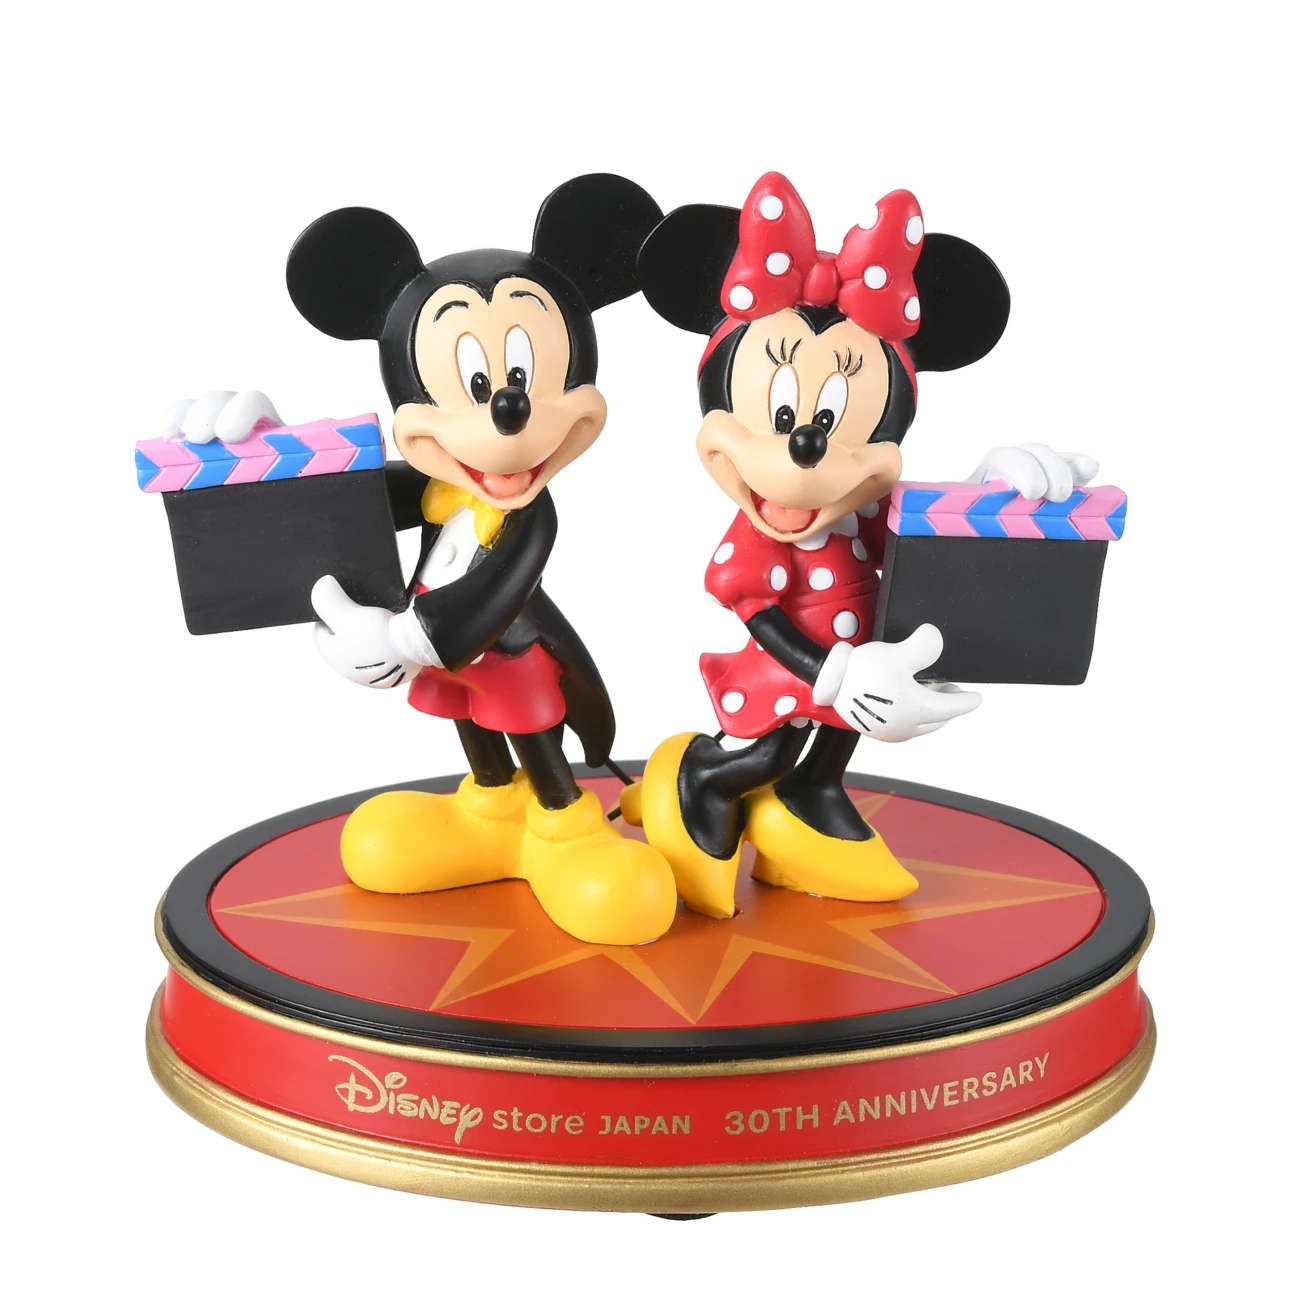 SDJ - Disney Store Japan 30TH Anniversary - Figure